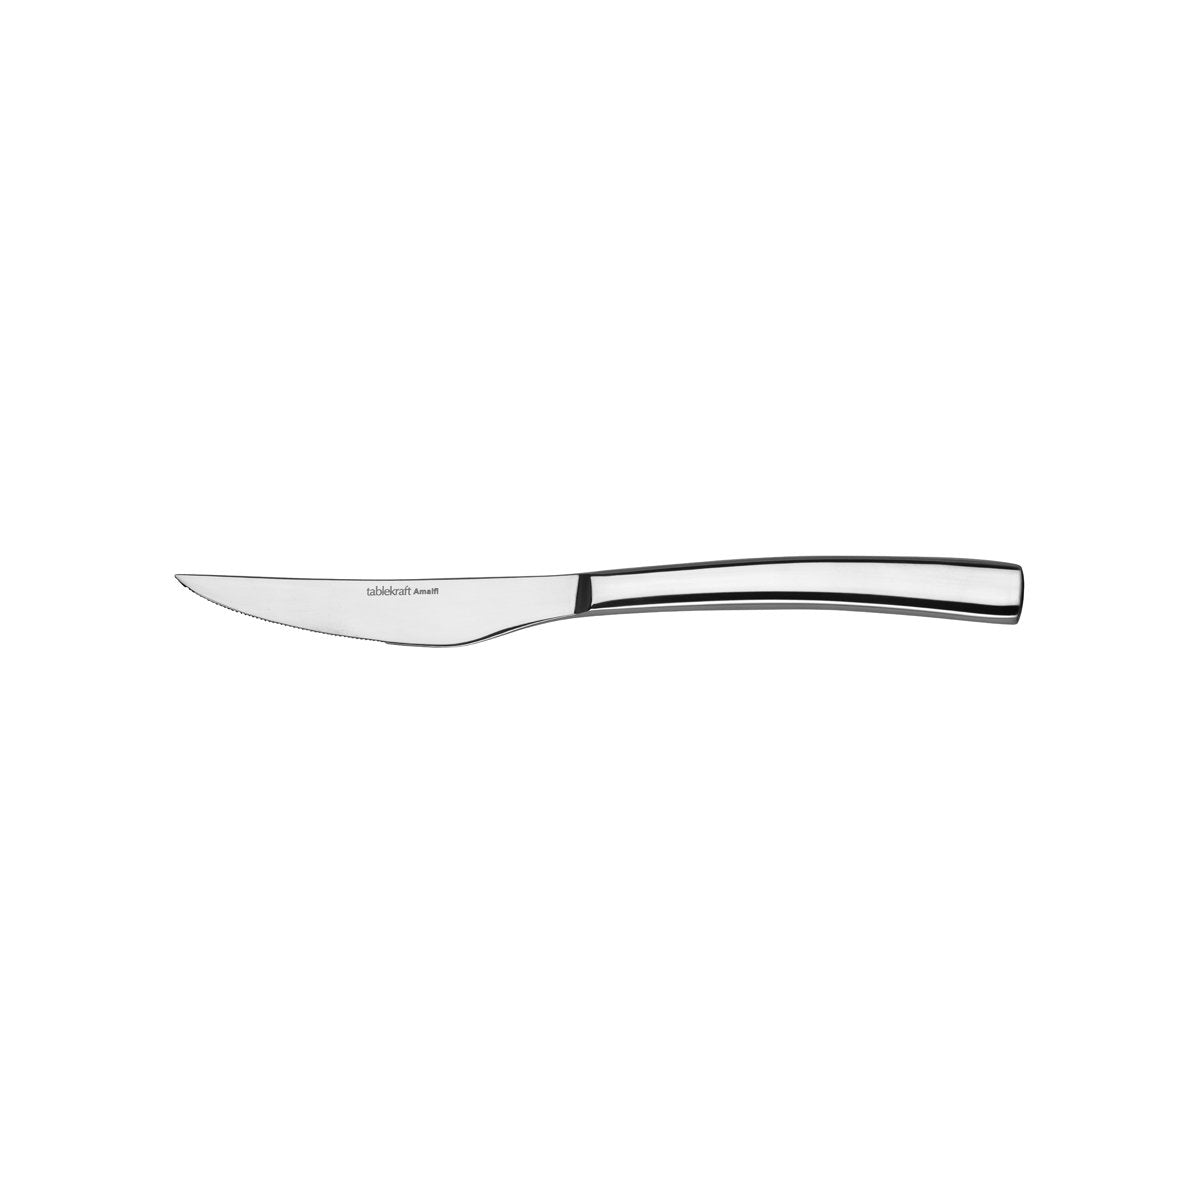 18173 Tablekraft Amalfi Steak Knife Tomkin Australia Hospitality Supplies